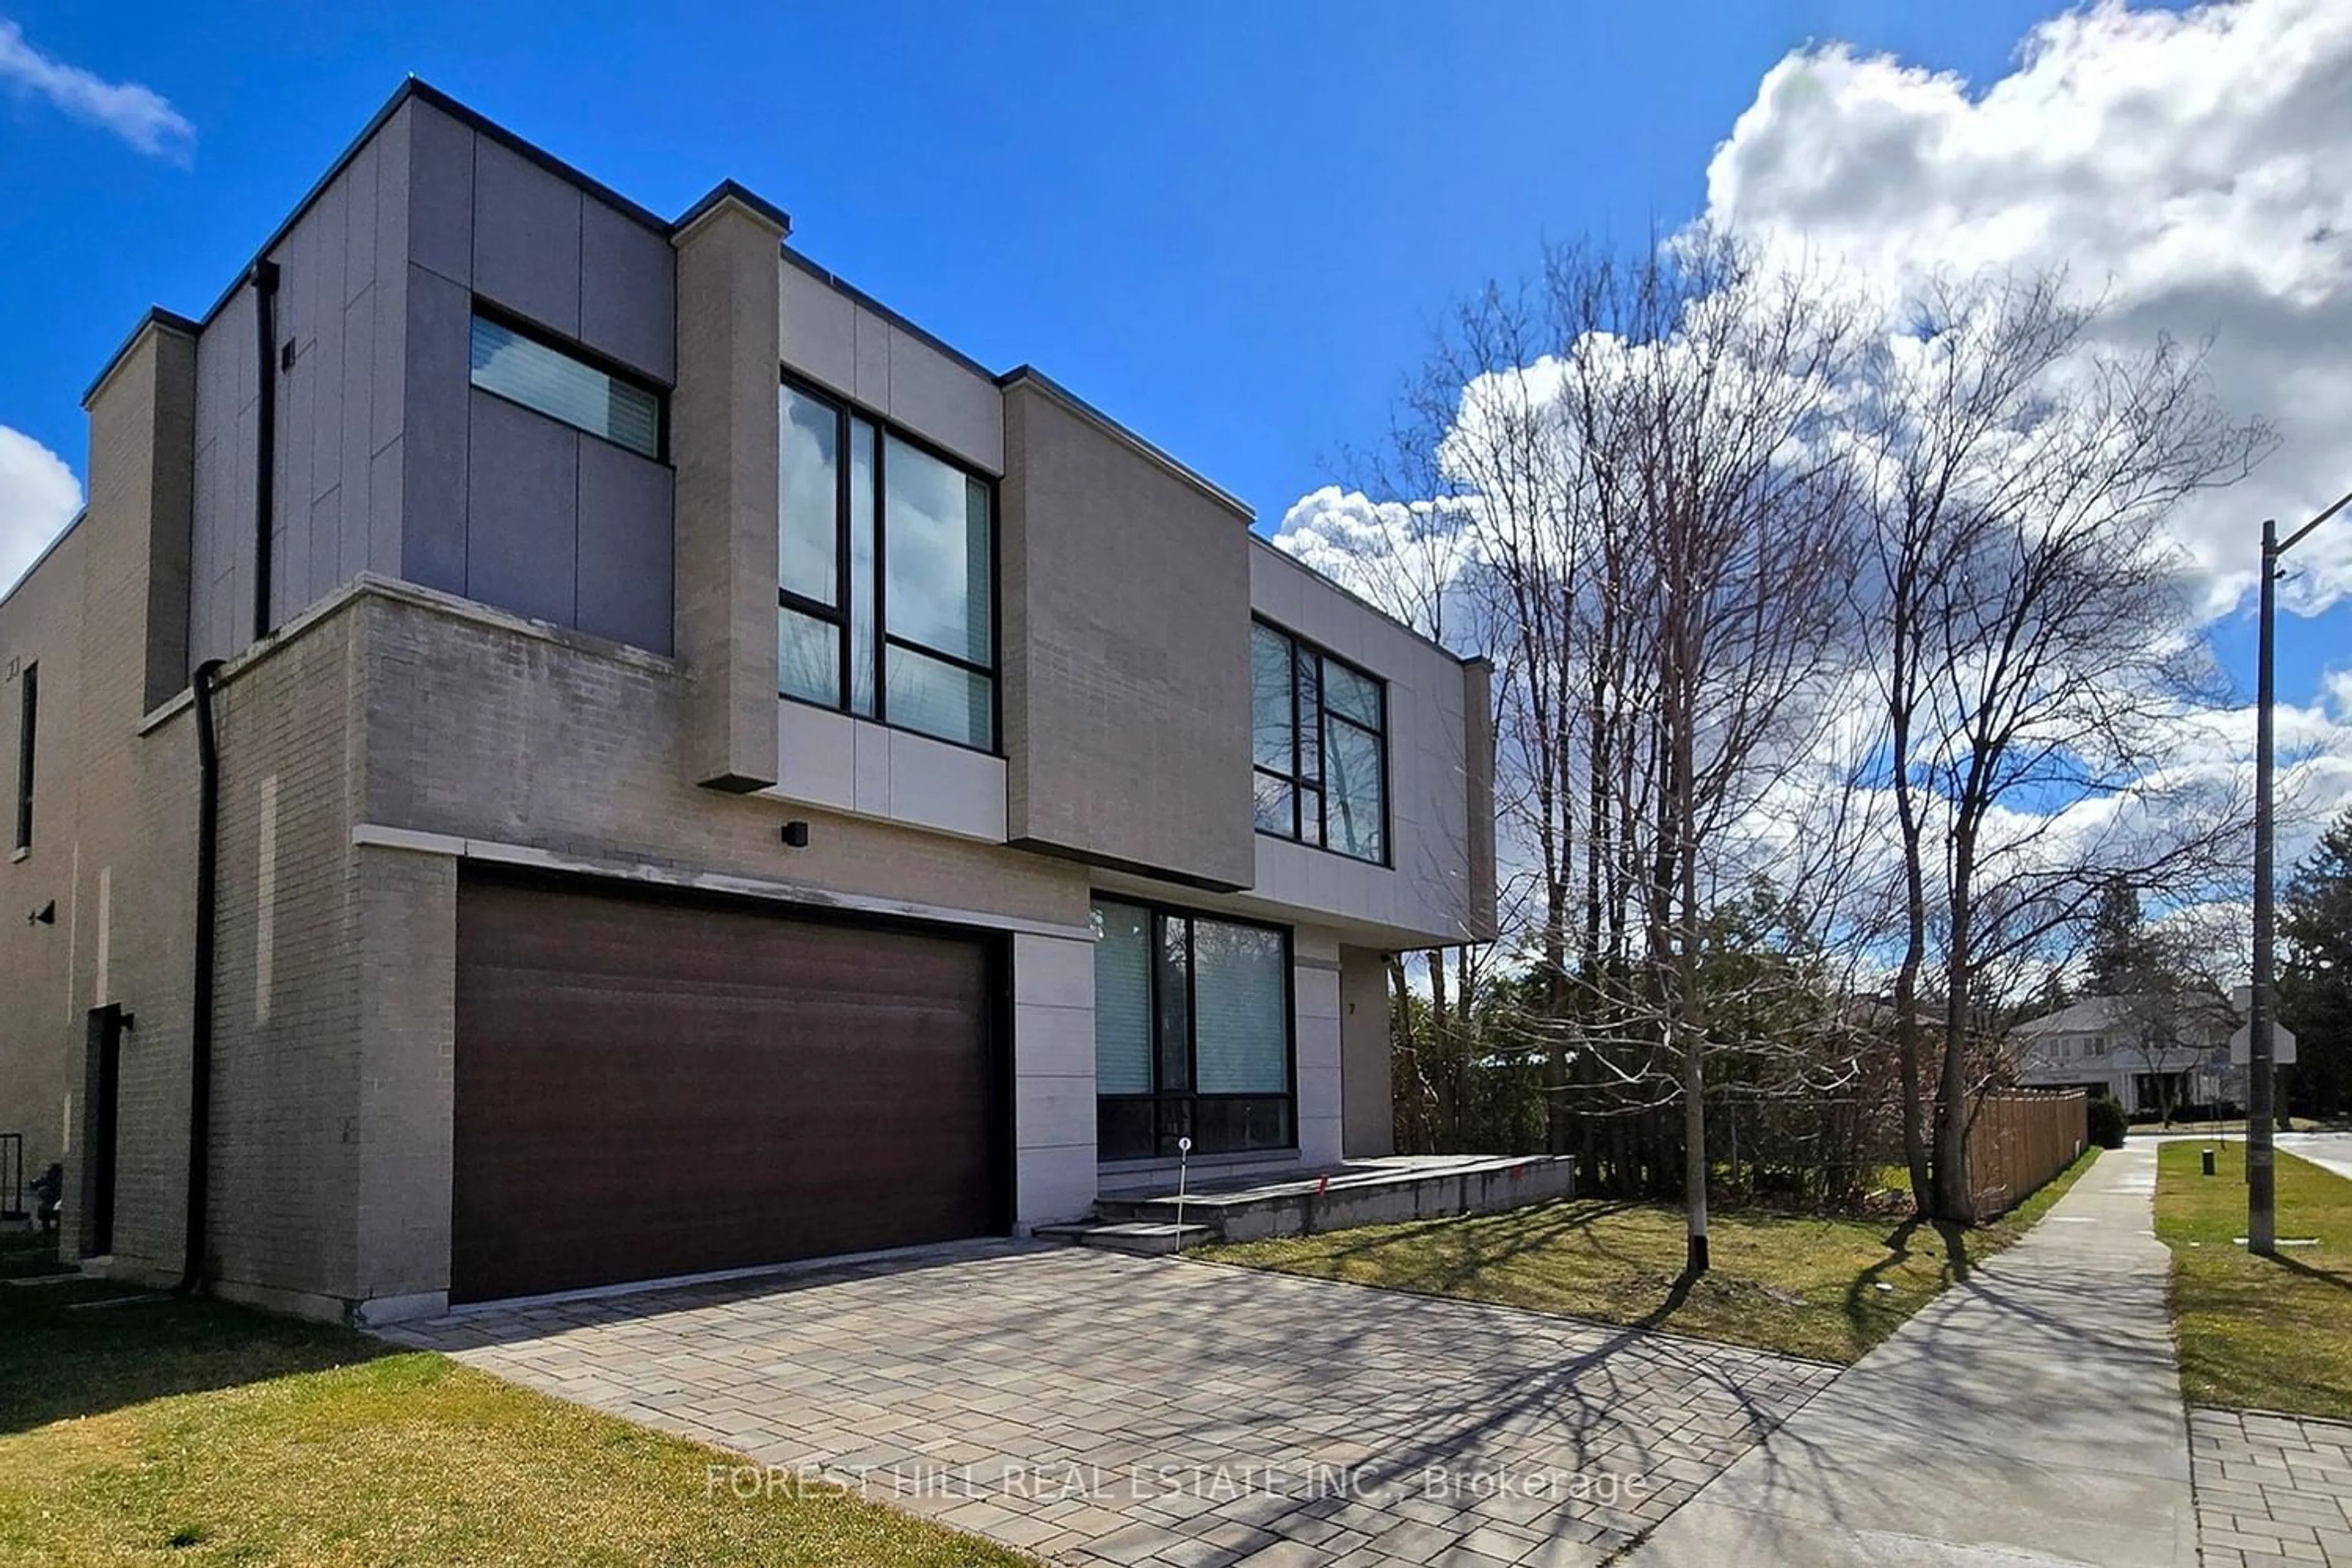 Home with stucco exterior material for 7 Fairmeadow Ave, Toronto Ontario M2P 0A5